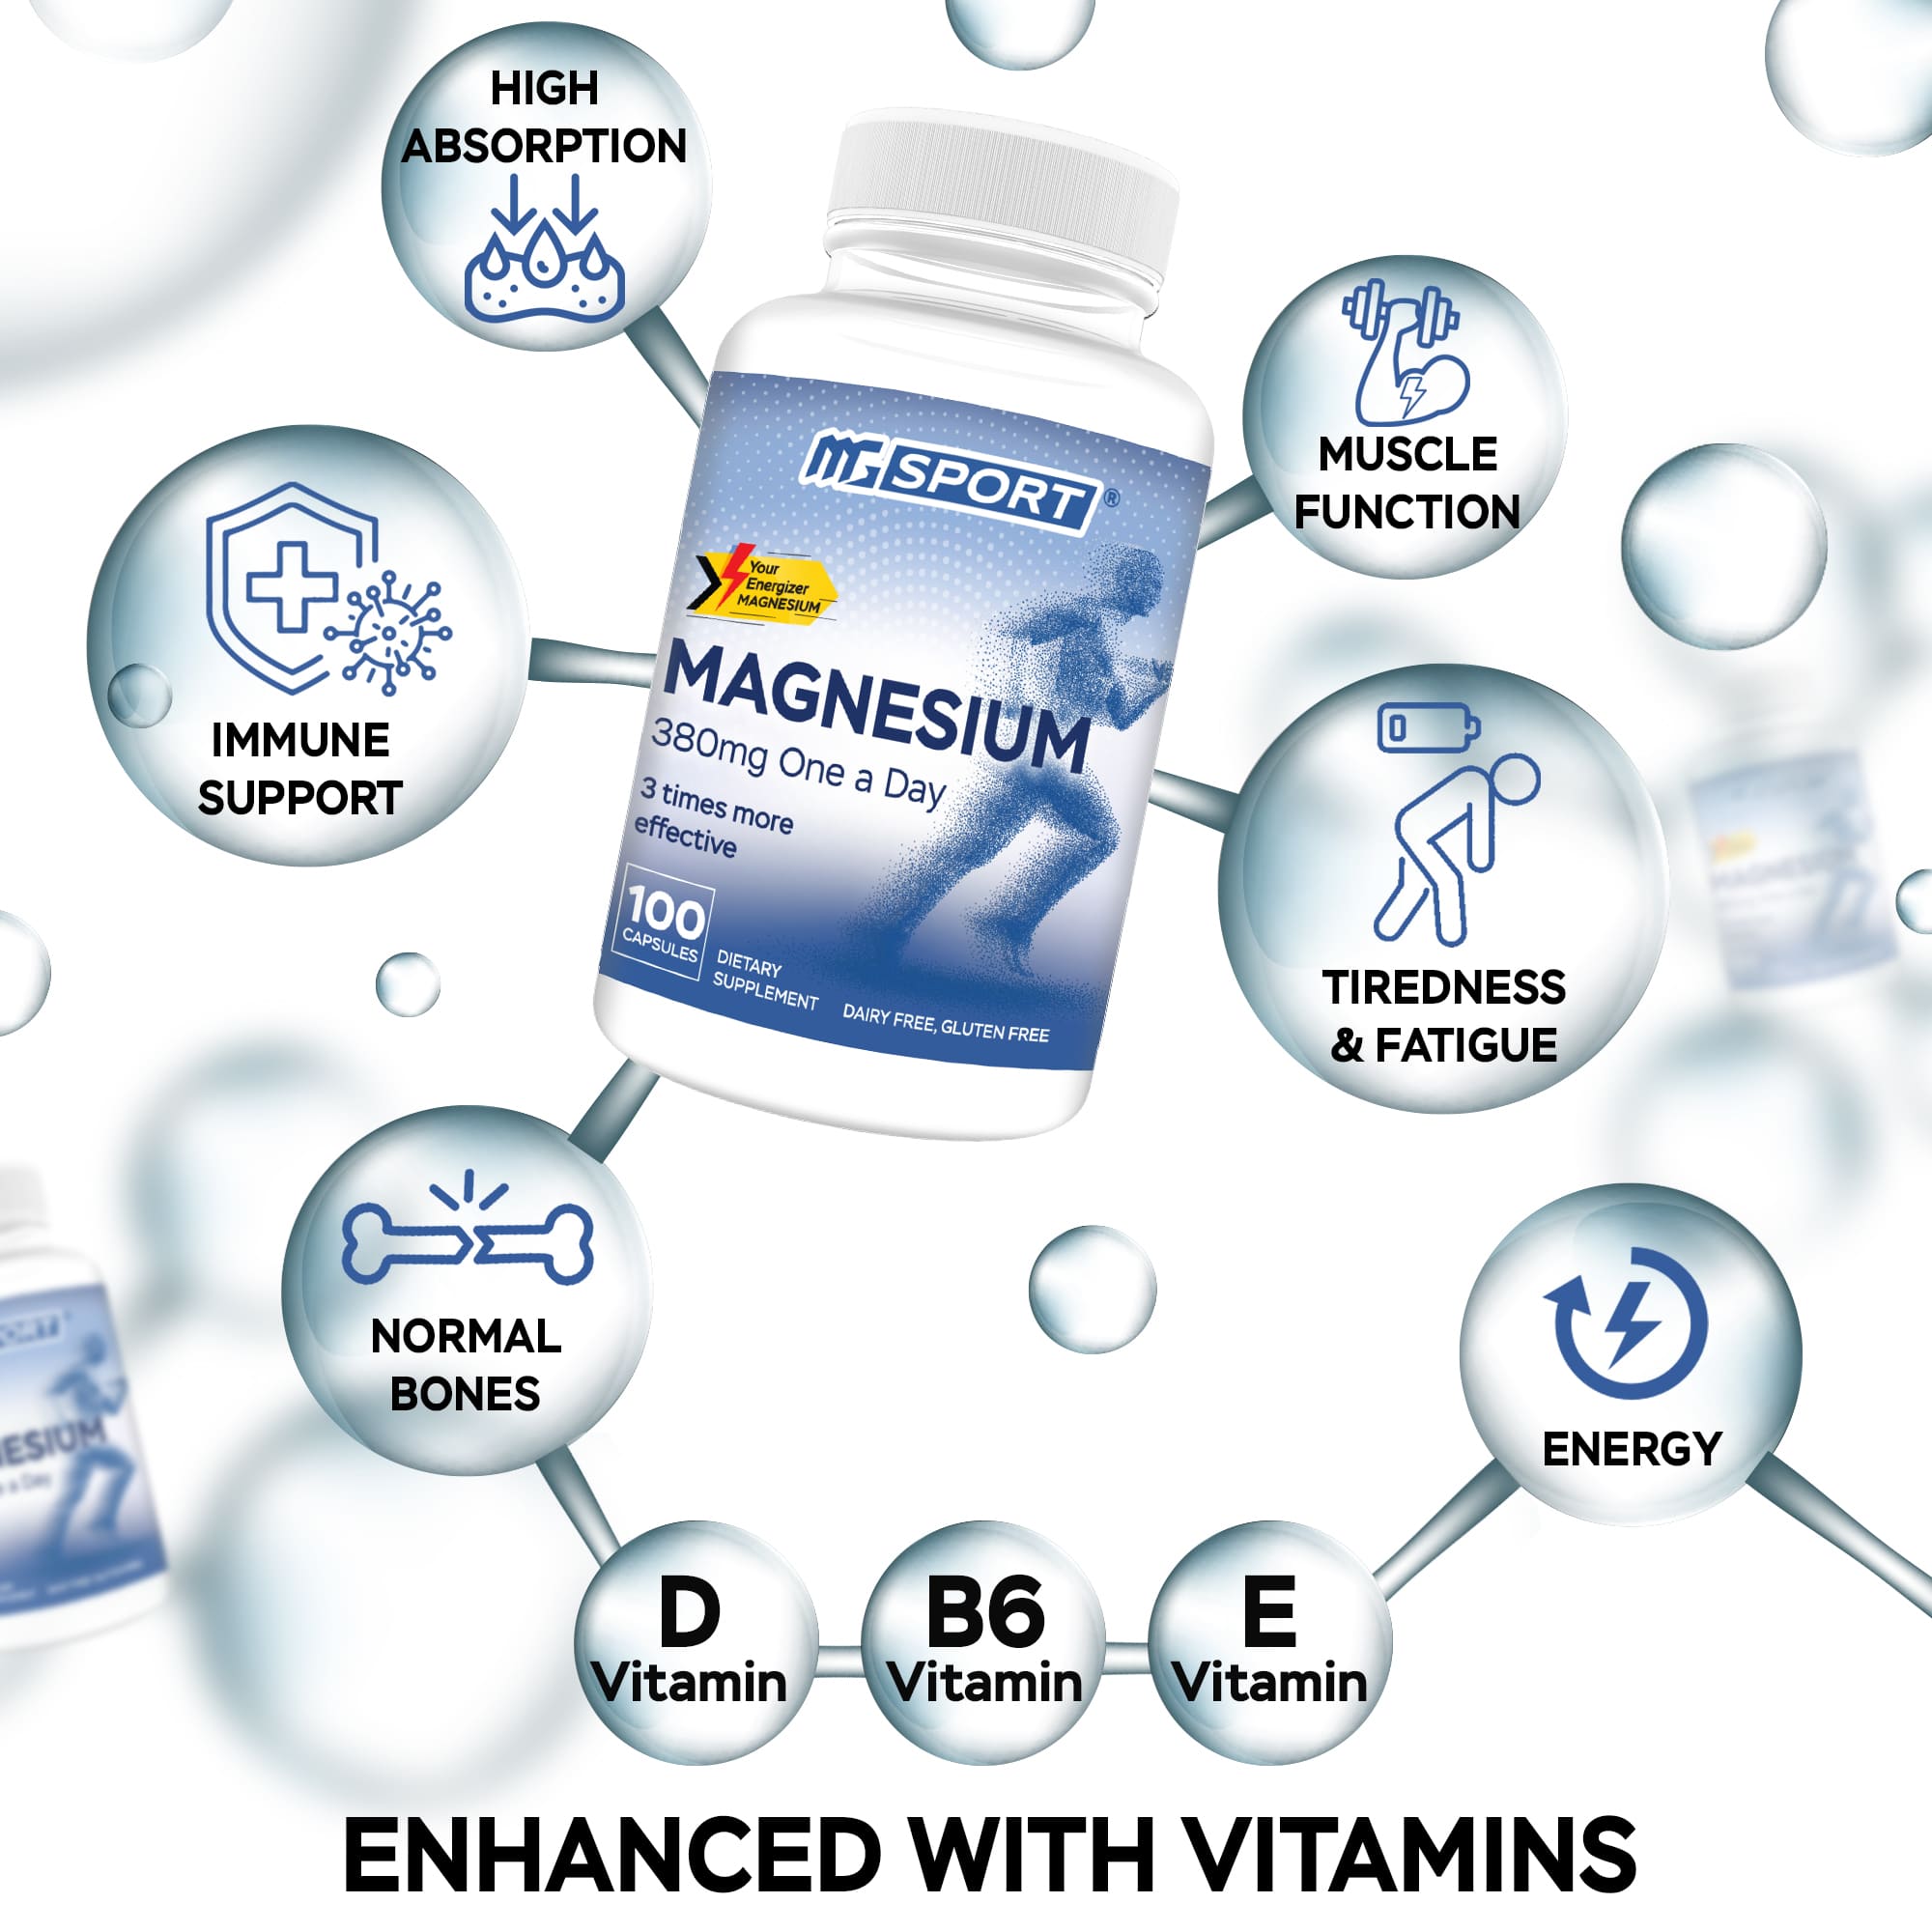 mangesium-100-tablets-benefits